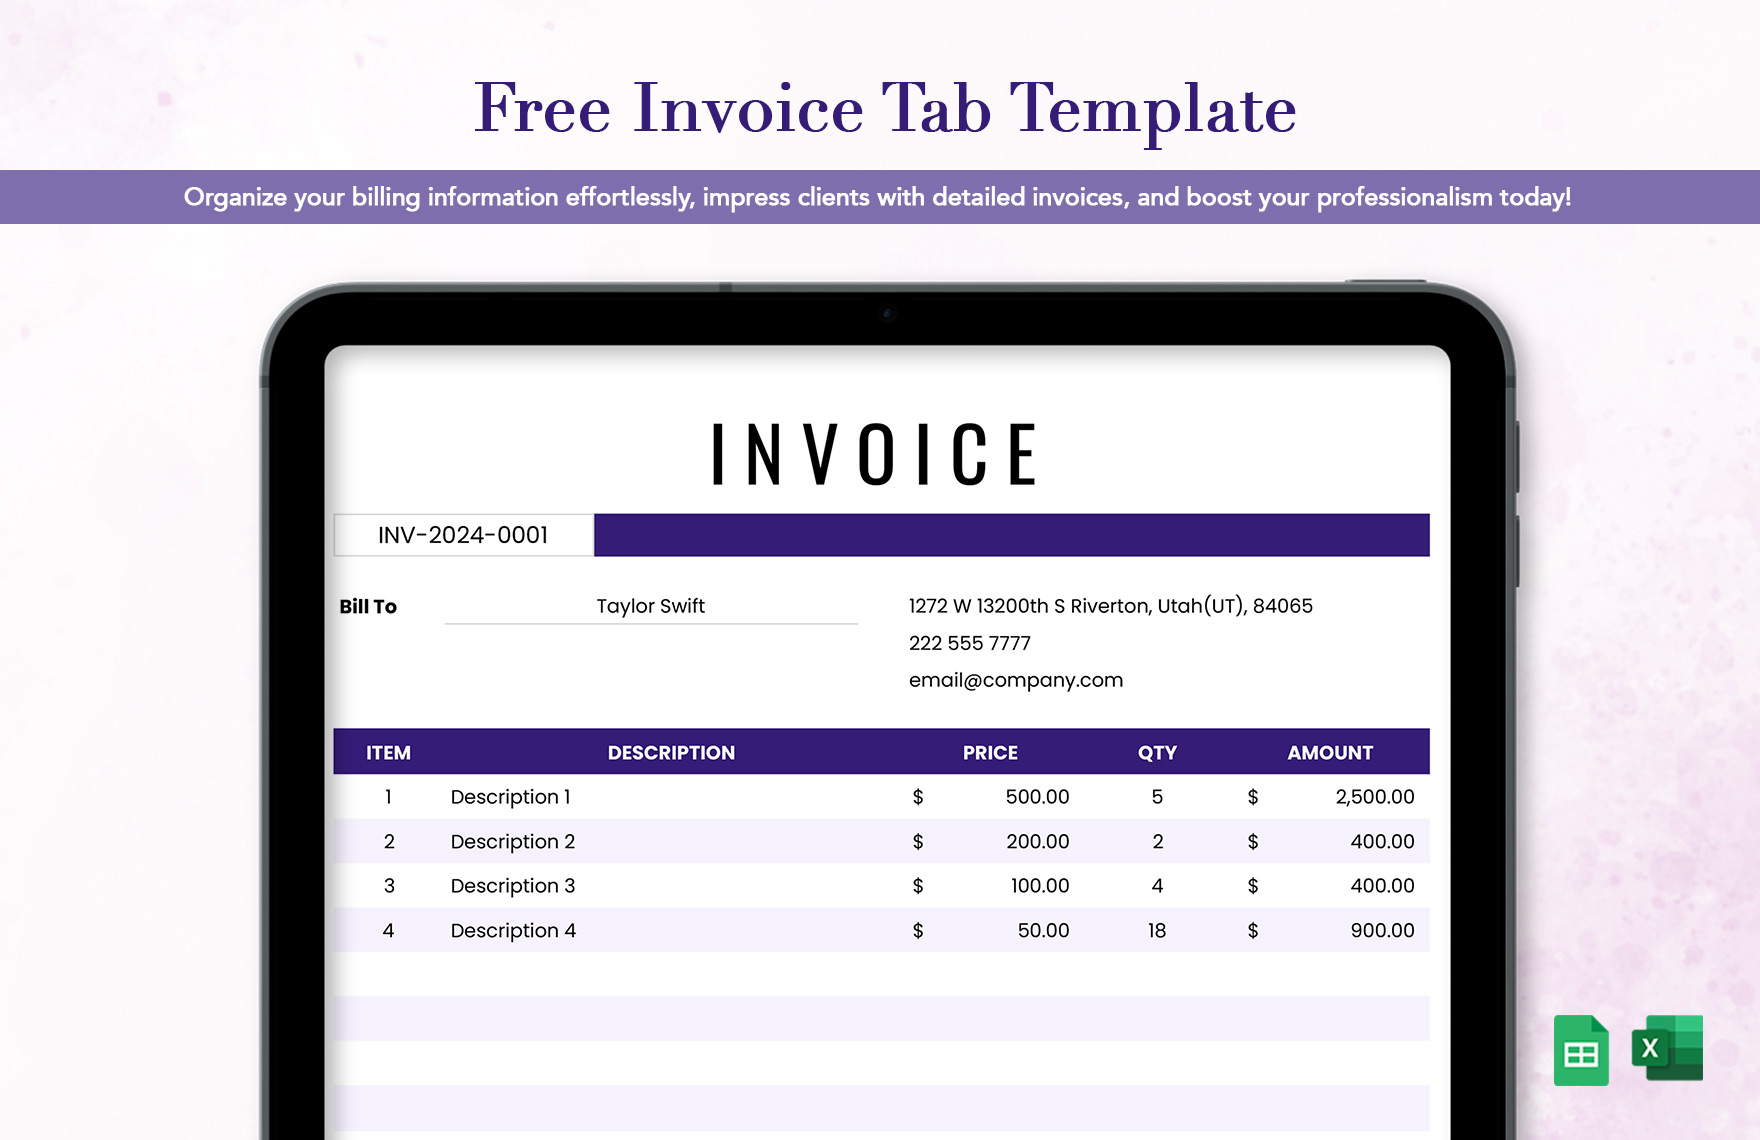 Invoice Tab Template